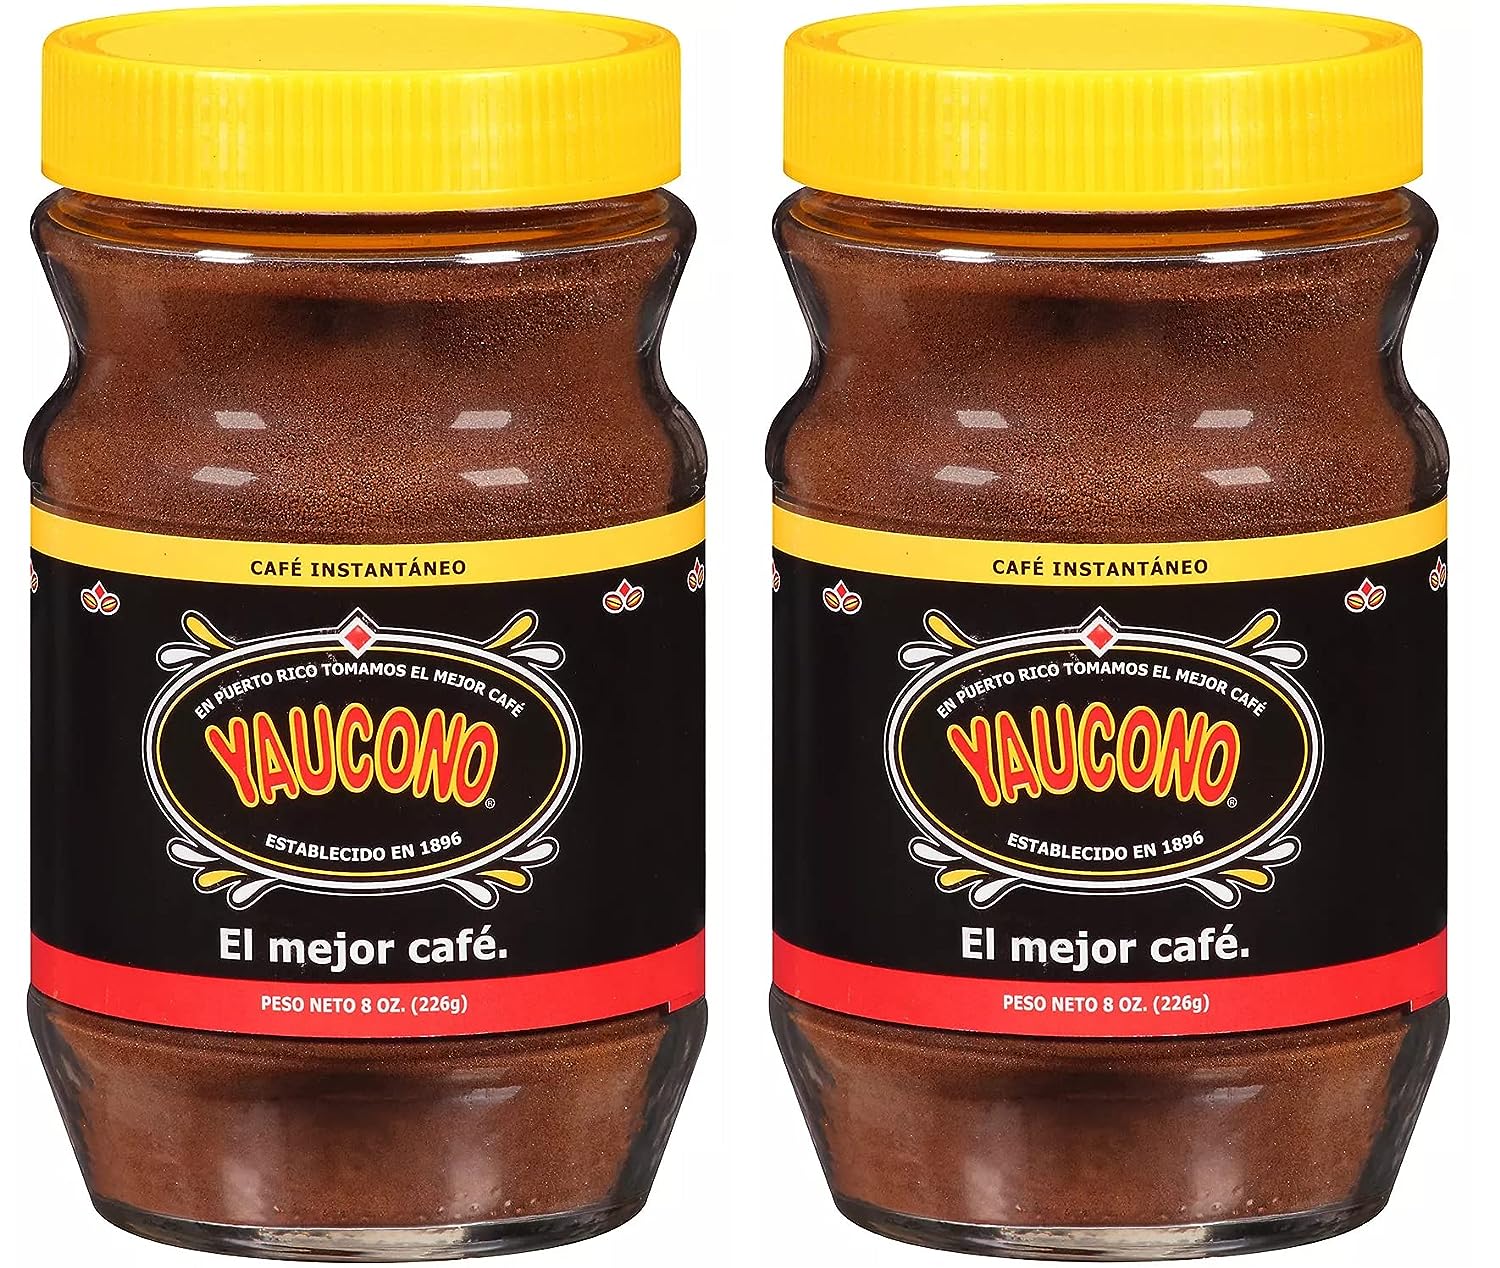 Yaucono Instant Coffee Jar (2 Pack)